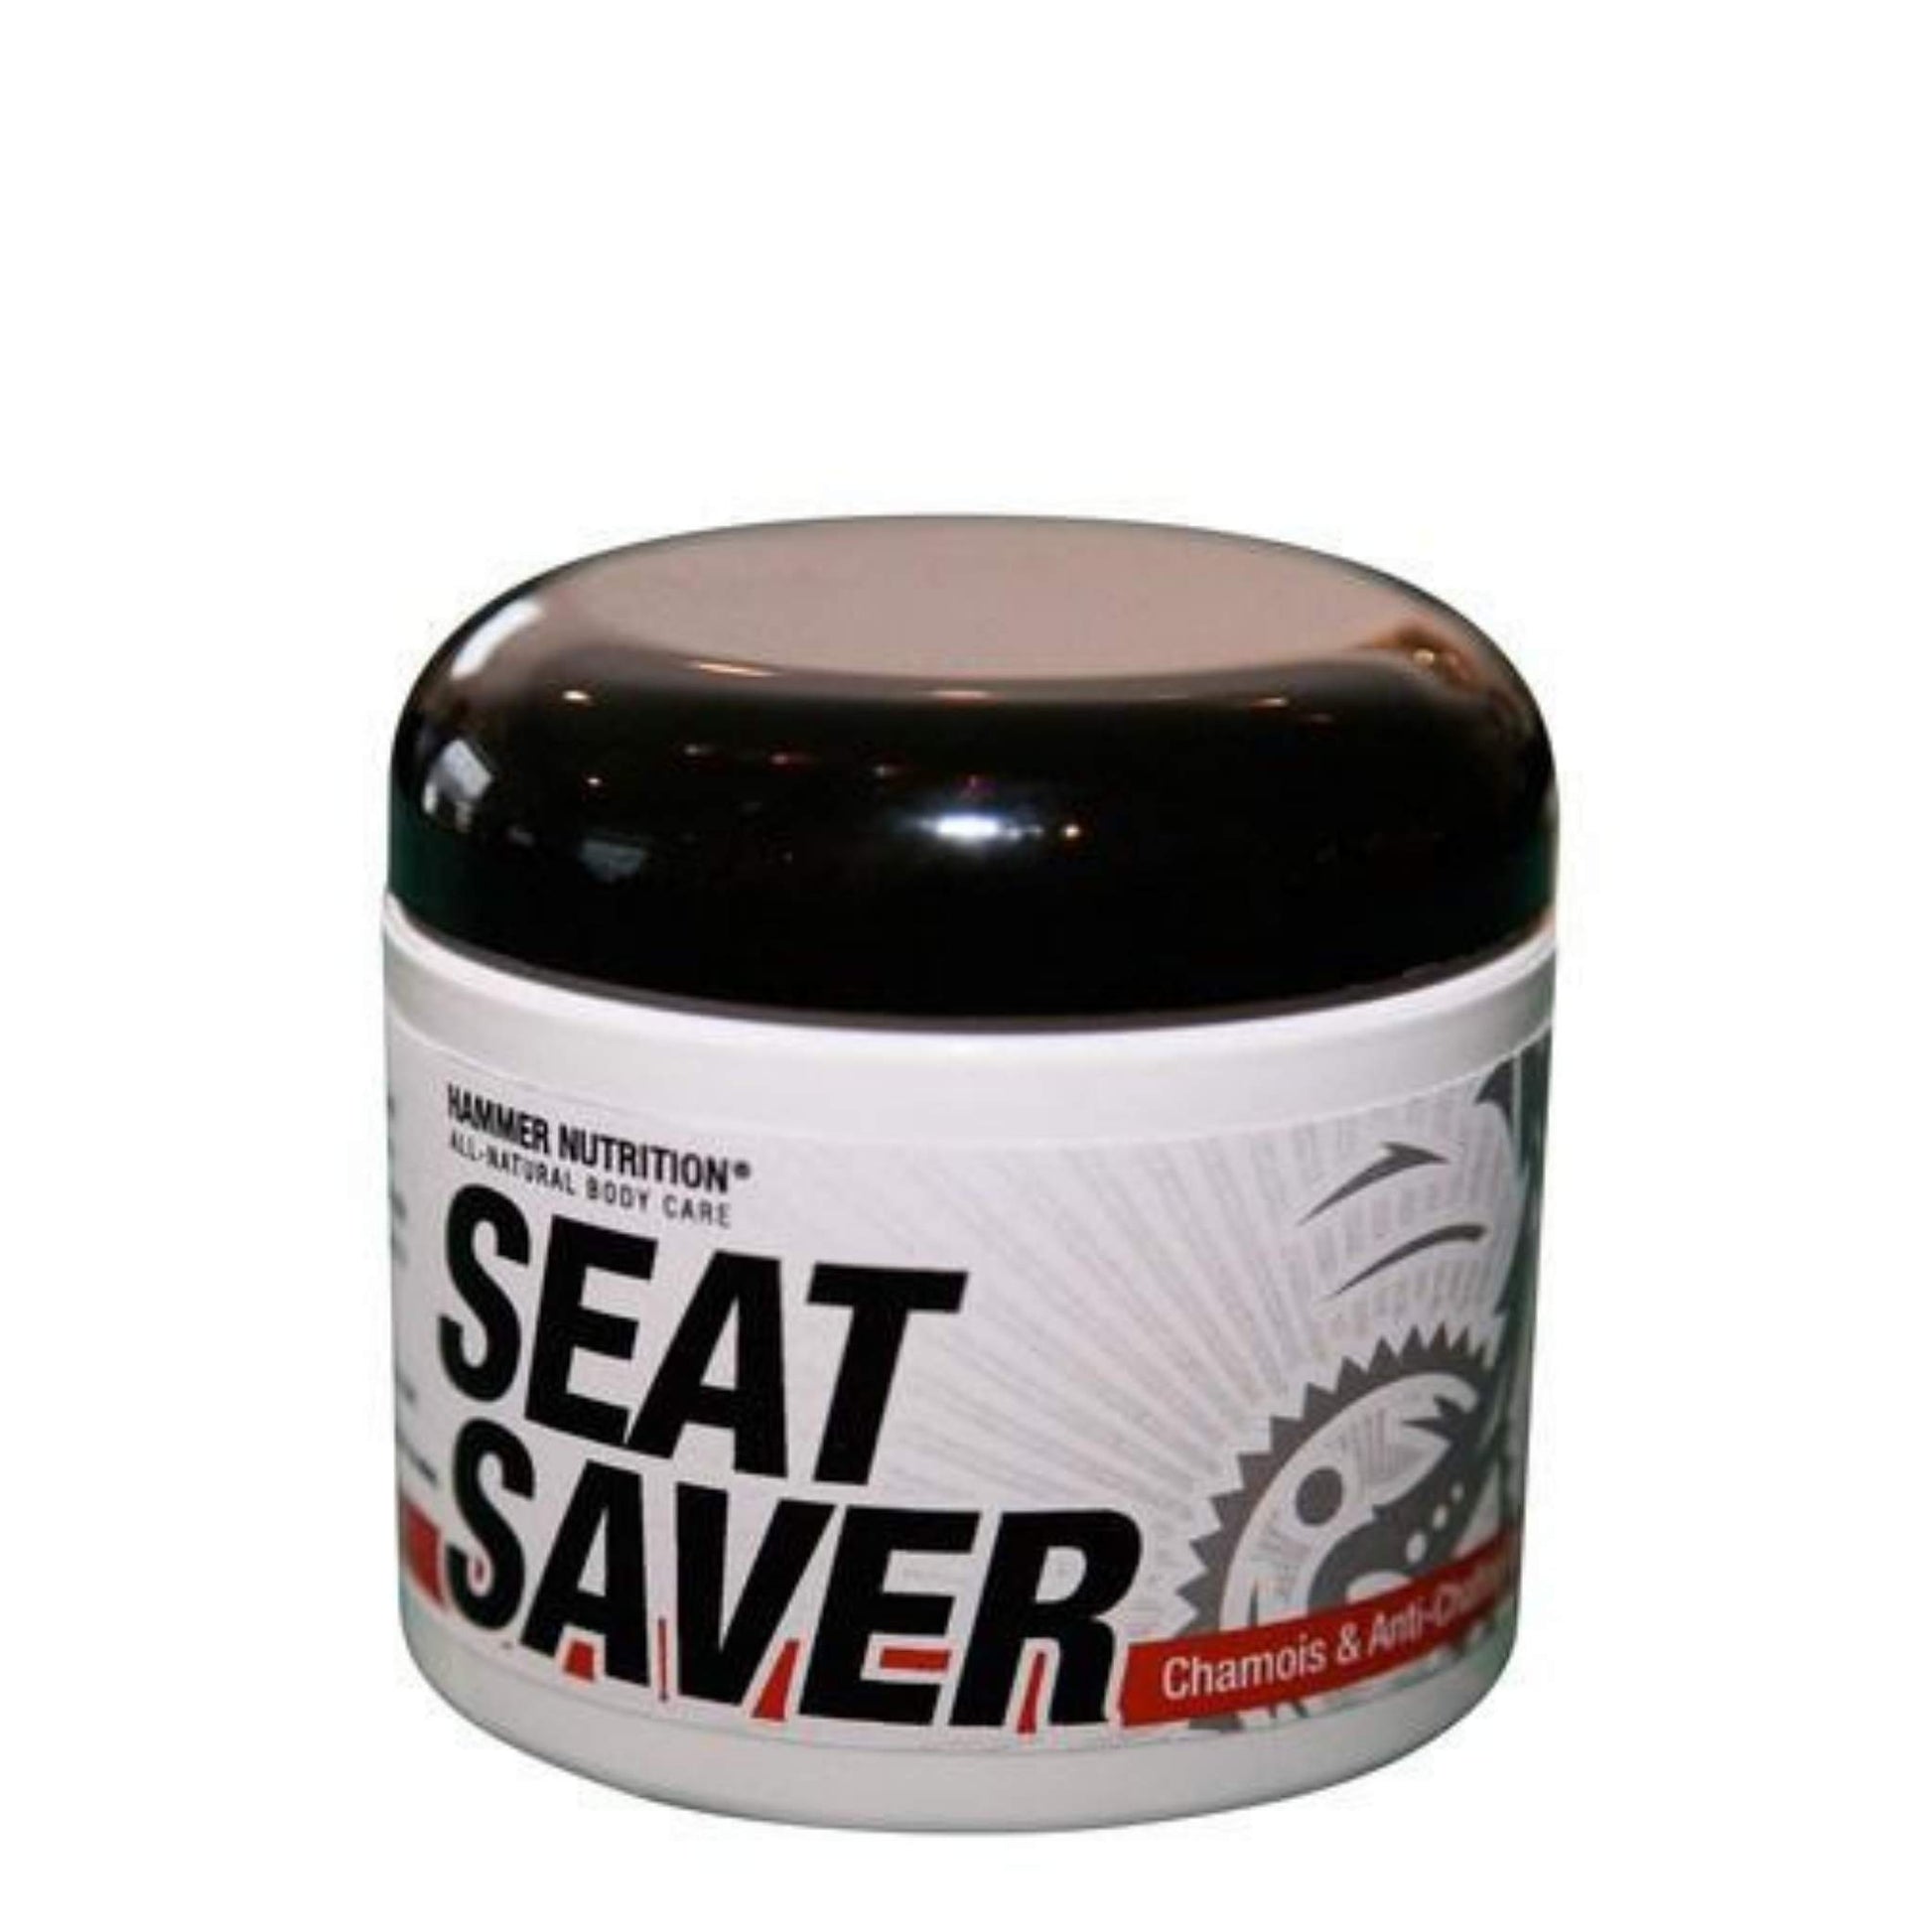 Hammer Nutrition - Seat Saver, 4.0oz, Team Perfect